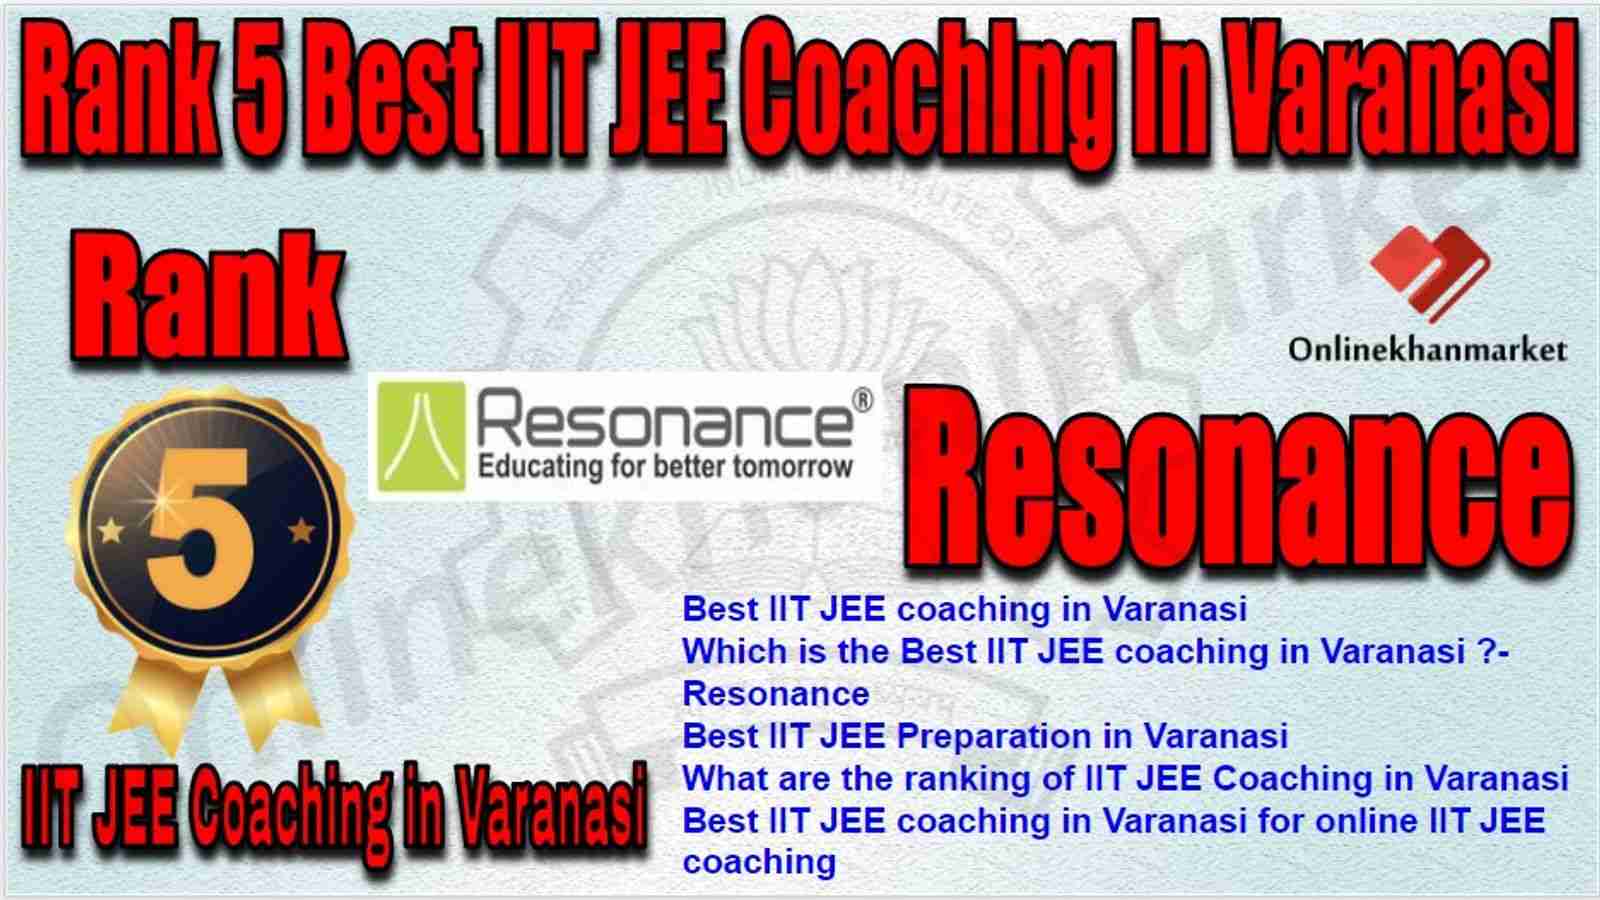 RANK 5 BEST IIT JEE Coaching in varanasi